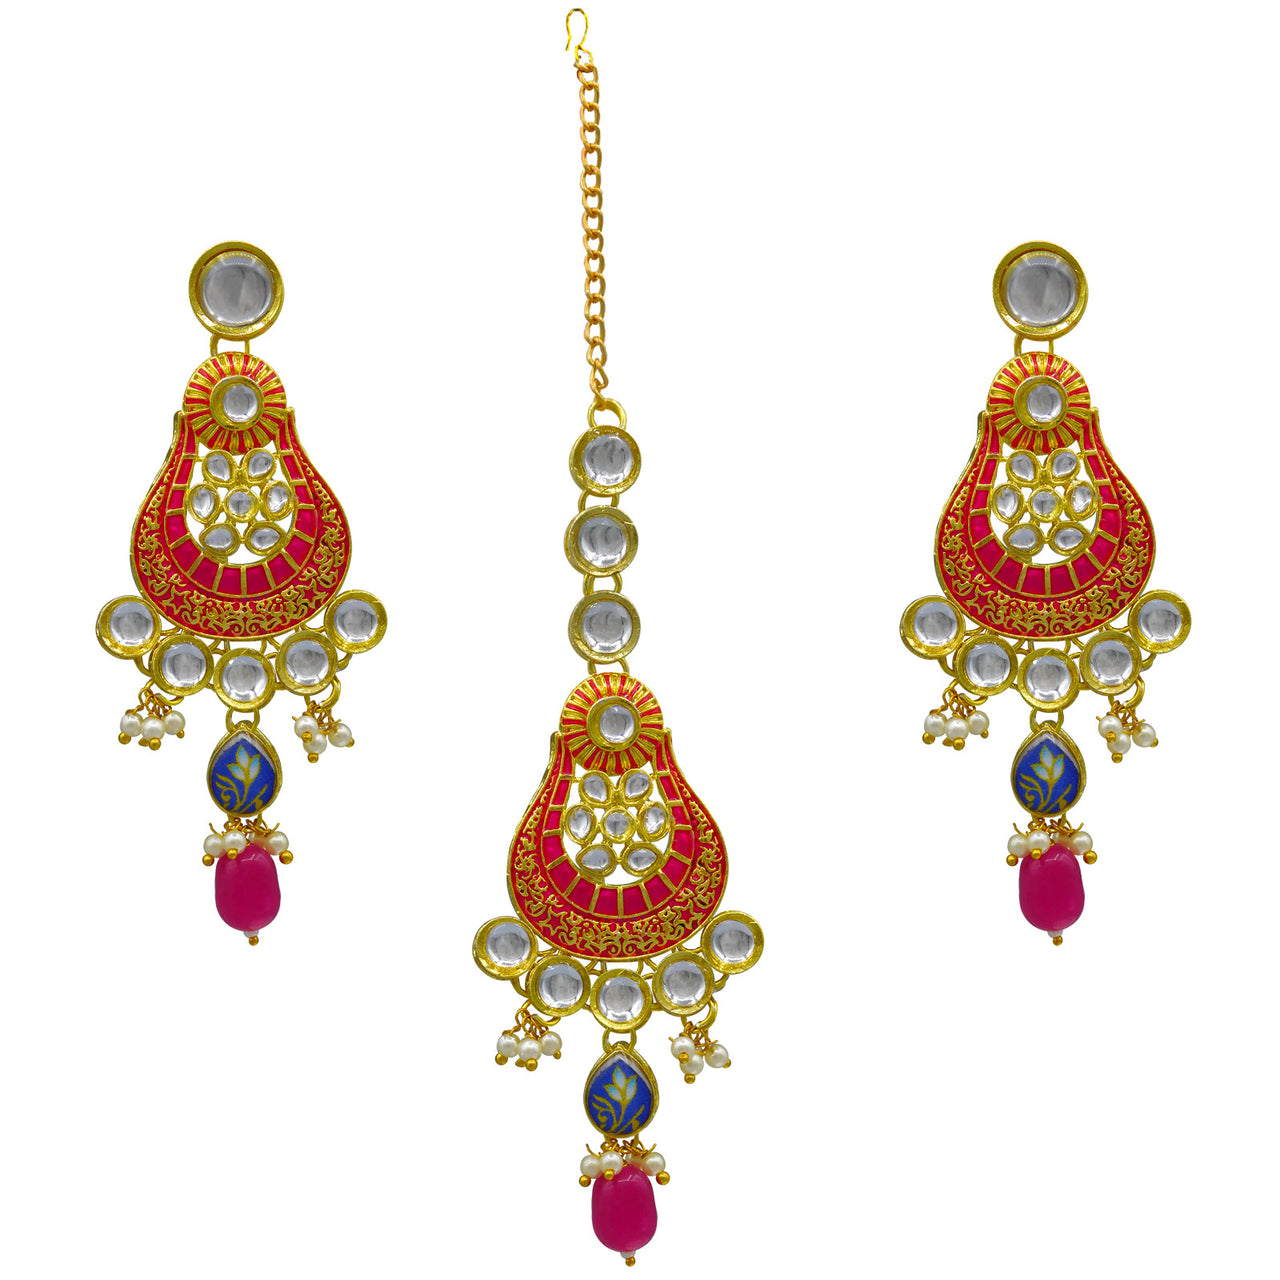 Products Sujwel Gold Plated Kundan Floral Design Choker Necklace Set (08-0458)